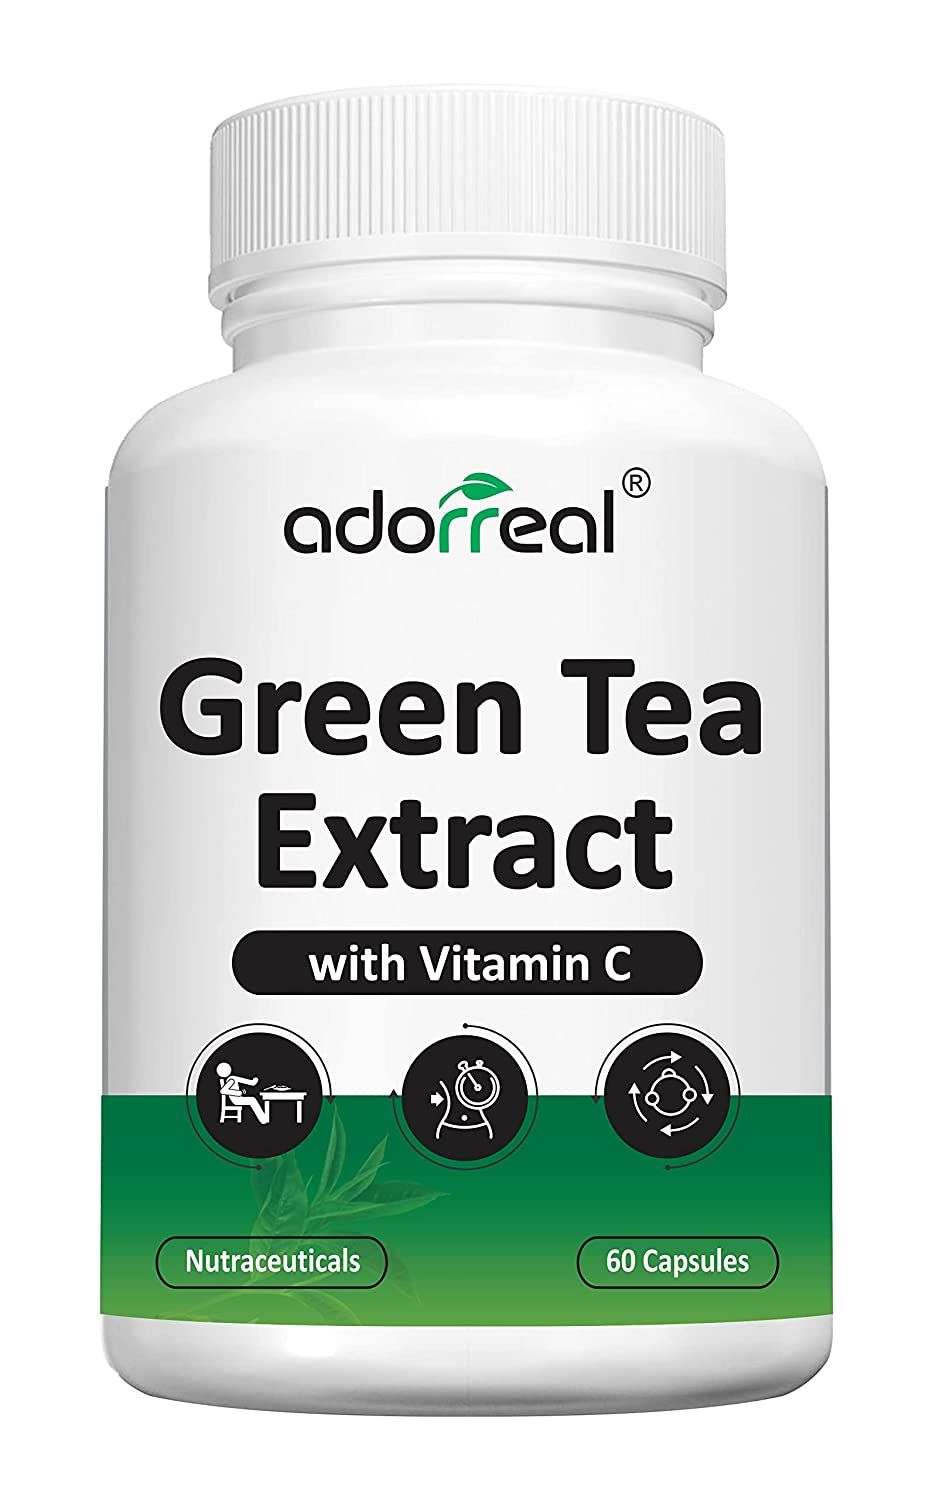 Adorreal Green Tea Extract Image